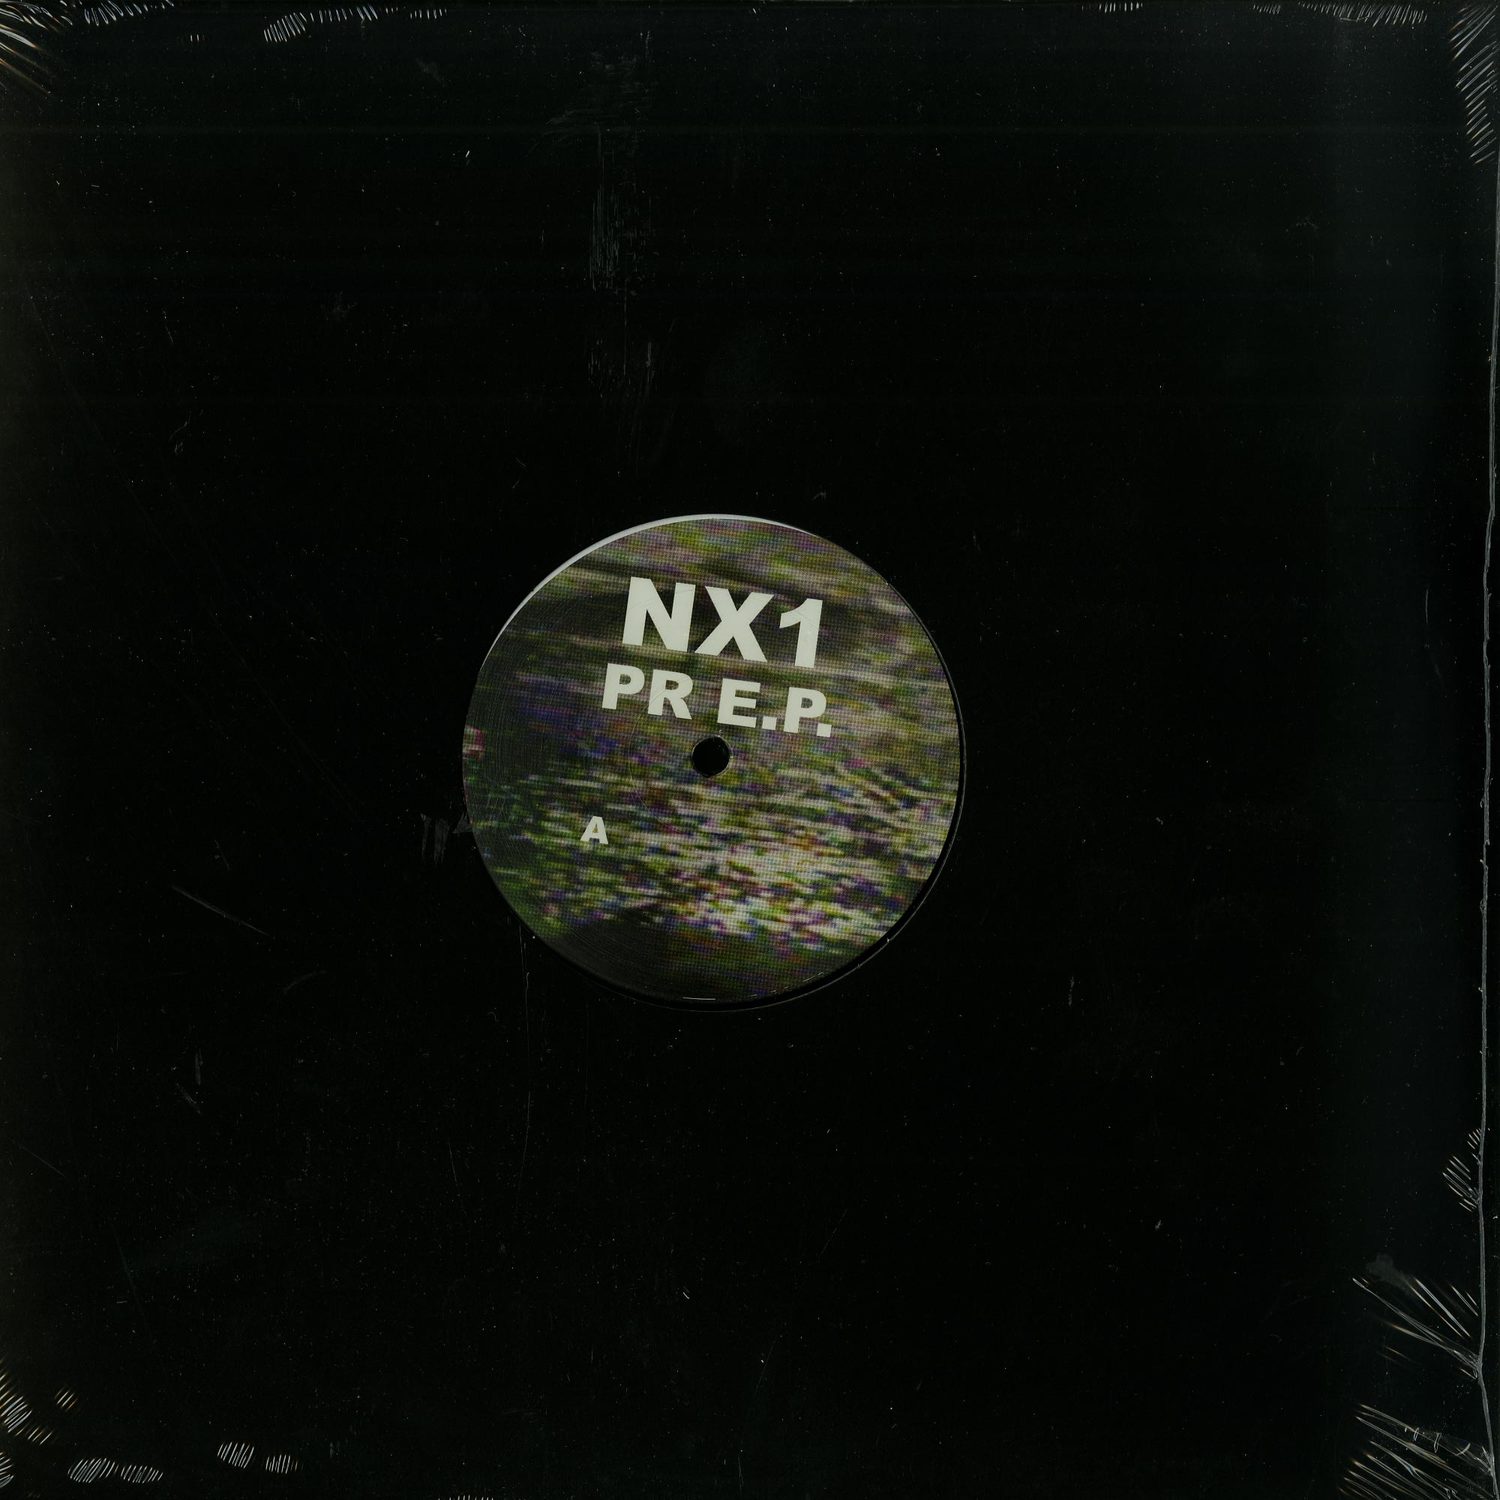 NX1 - PR E.P.